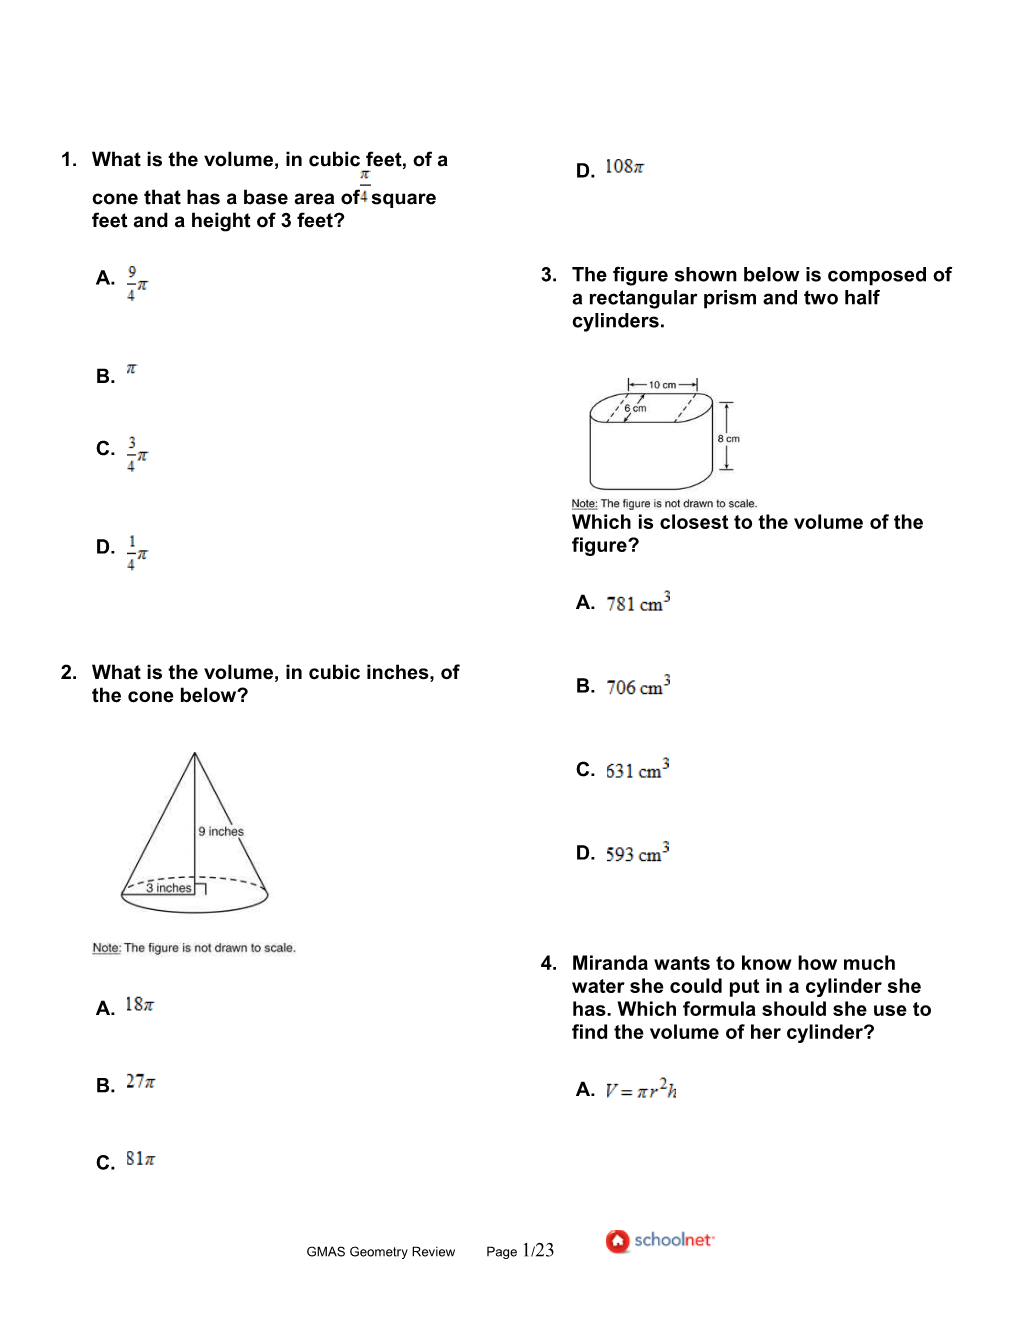 GMAS Geometry Review Page 1/1